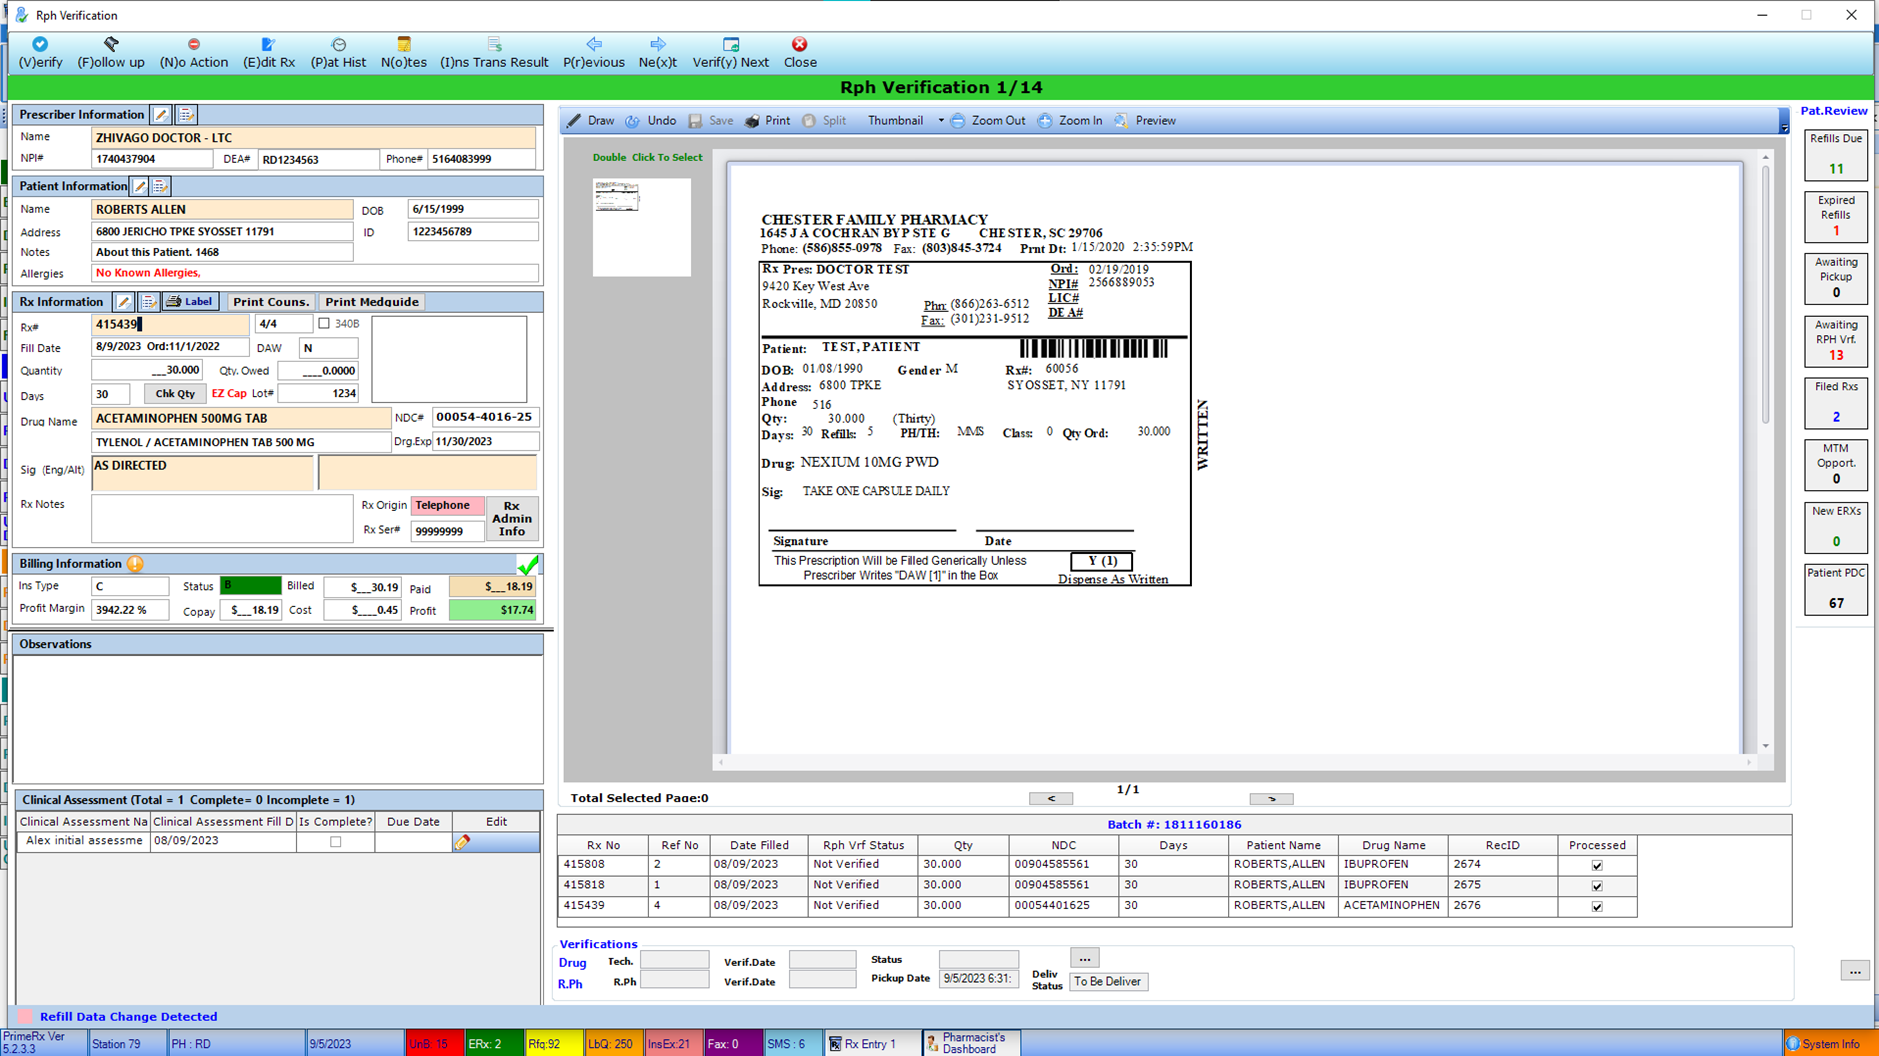 PrimeRx Pharmacy Software Document Scanning